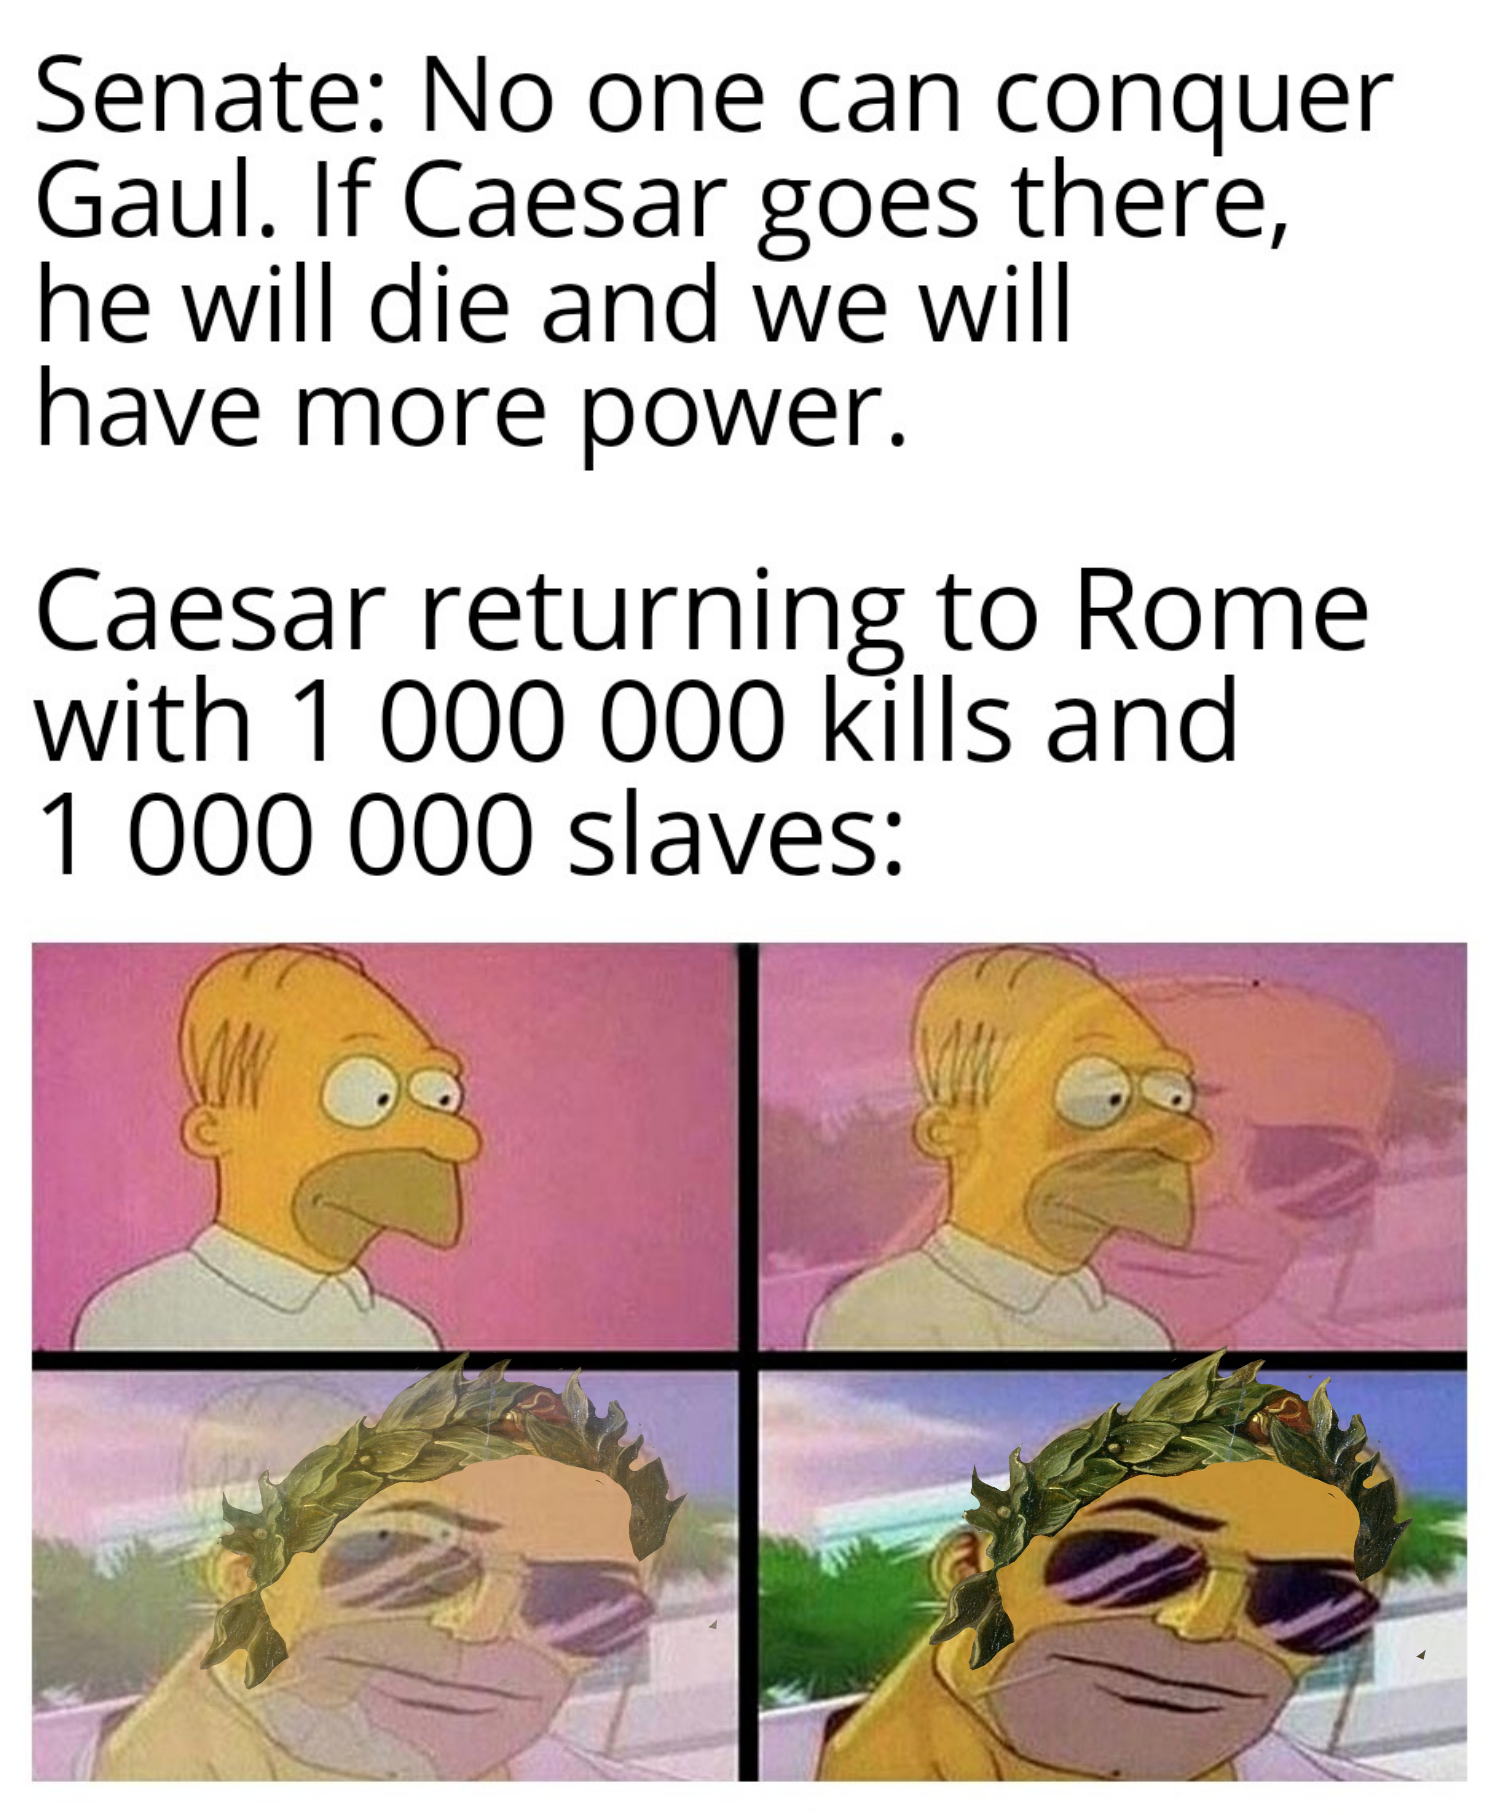 Roma invicta indeed